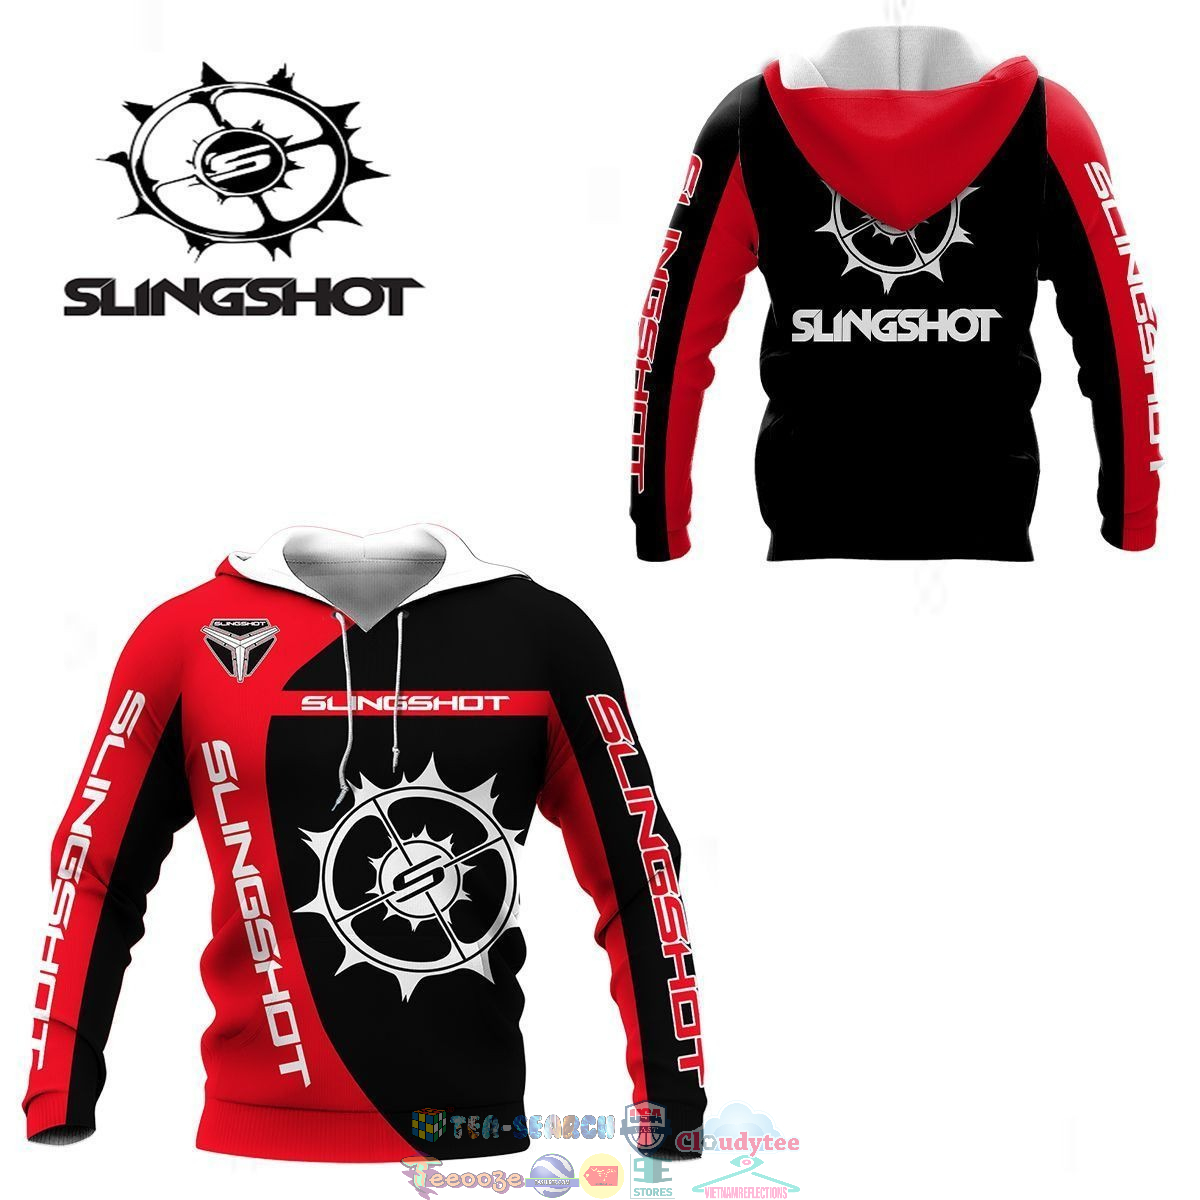 Slingshot ver 5 3D hoodie and t-shirt – Saleoff